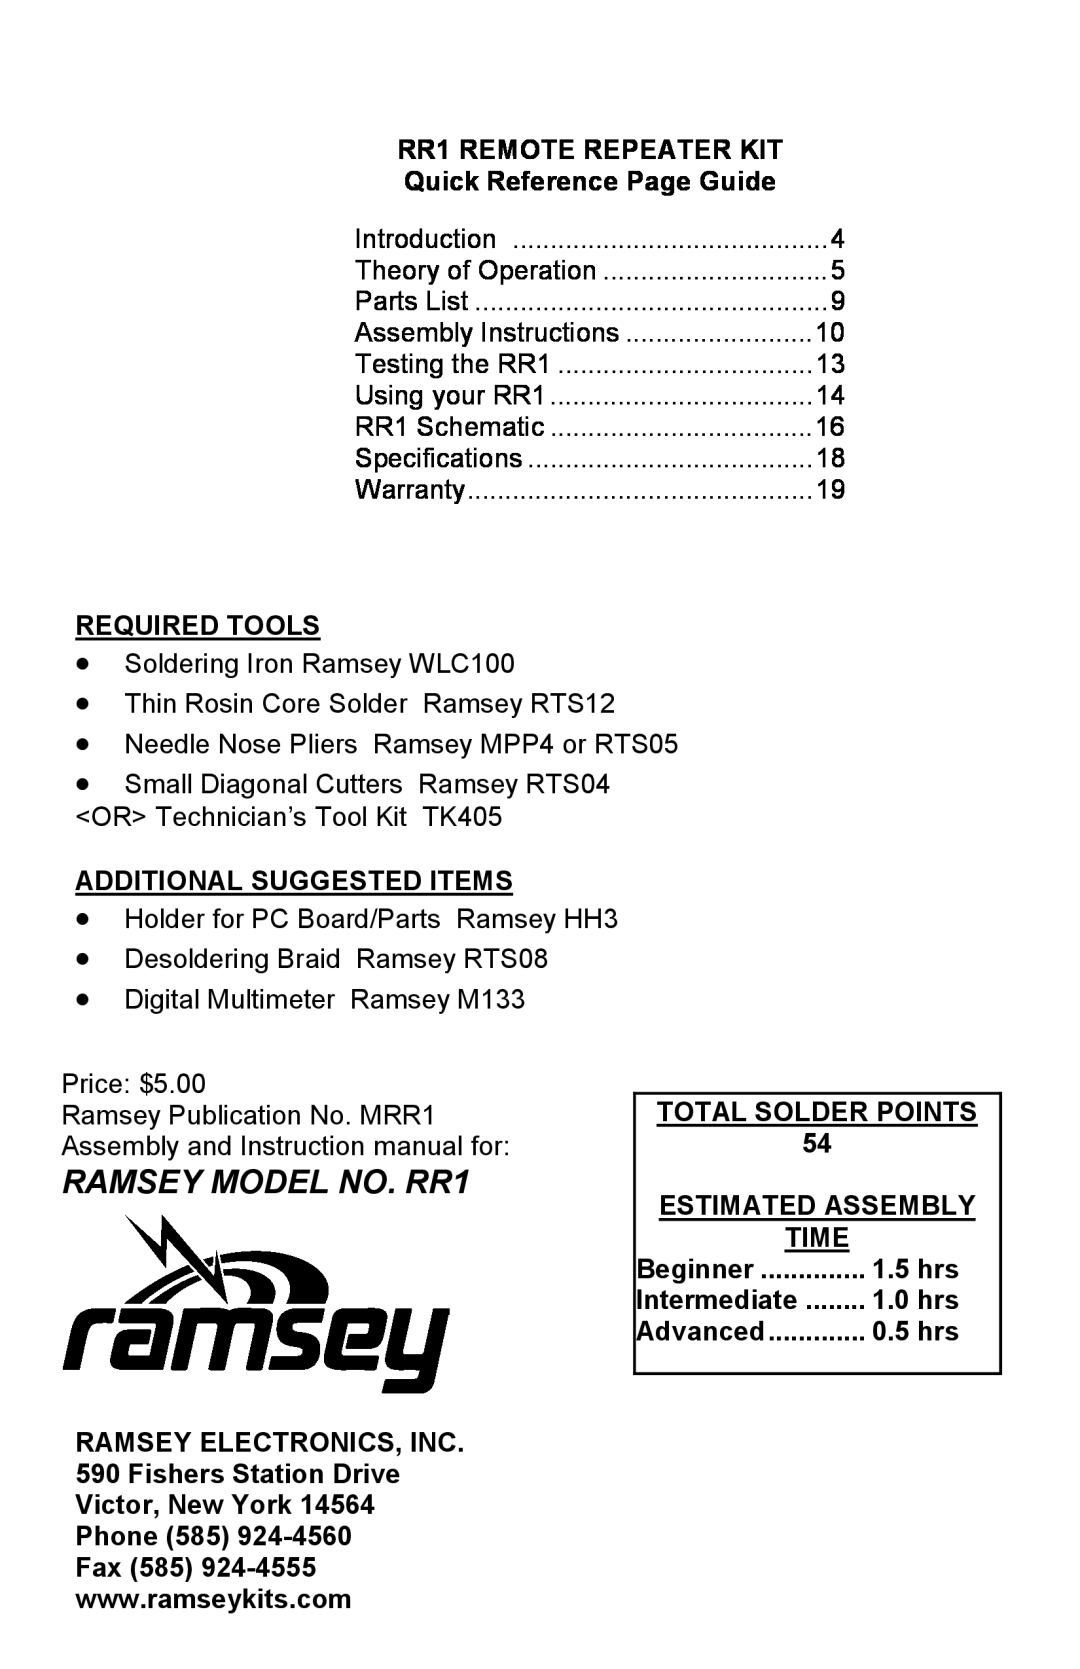 Ramsey Electronics manual RAMSEY MODEL NO. RR1 